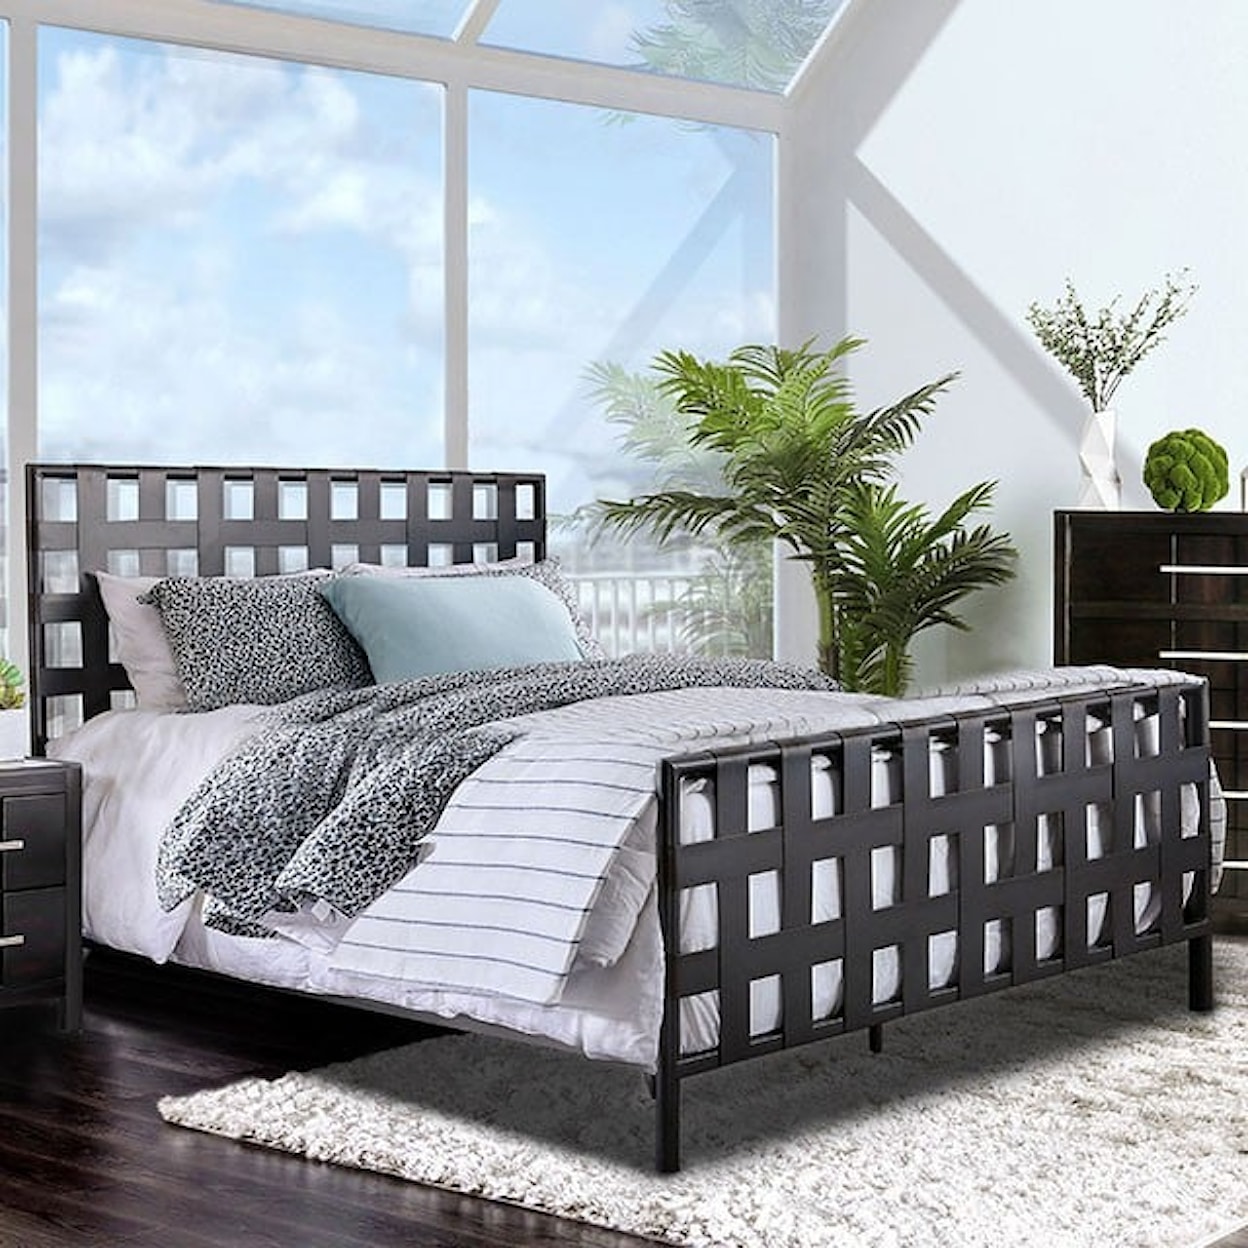 Furniture of America Earlgate Twin Bed with Lattice Style Headboard